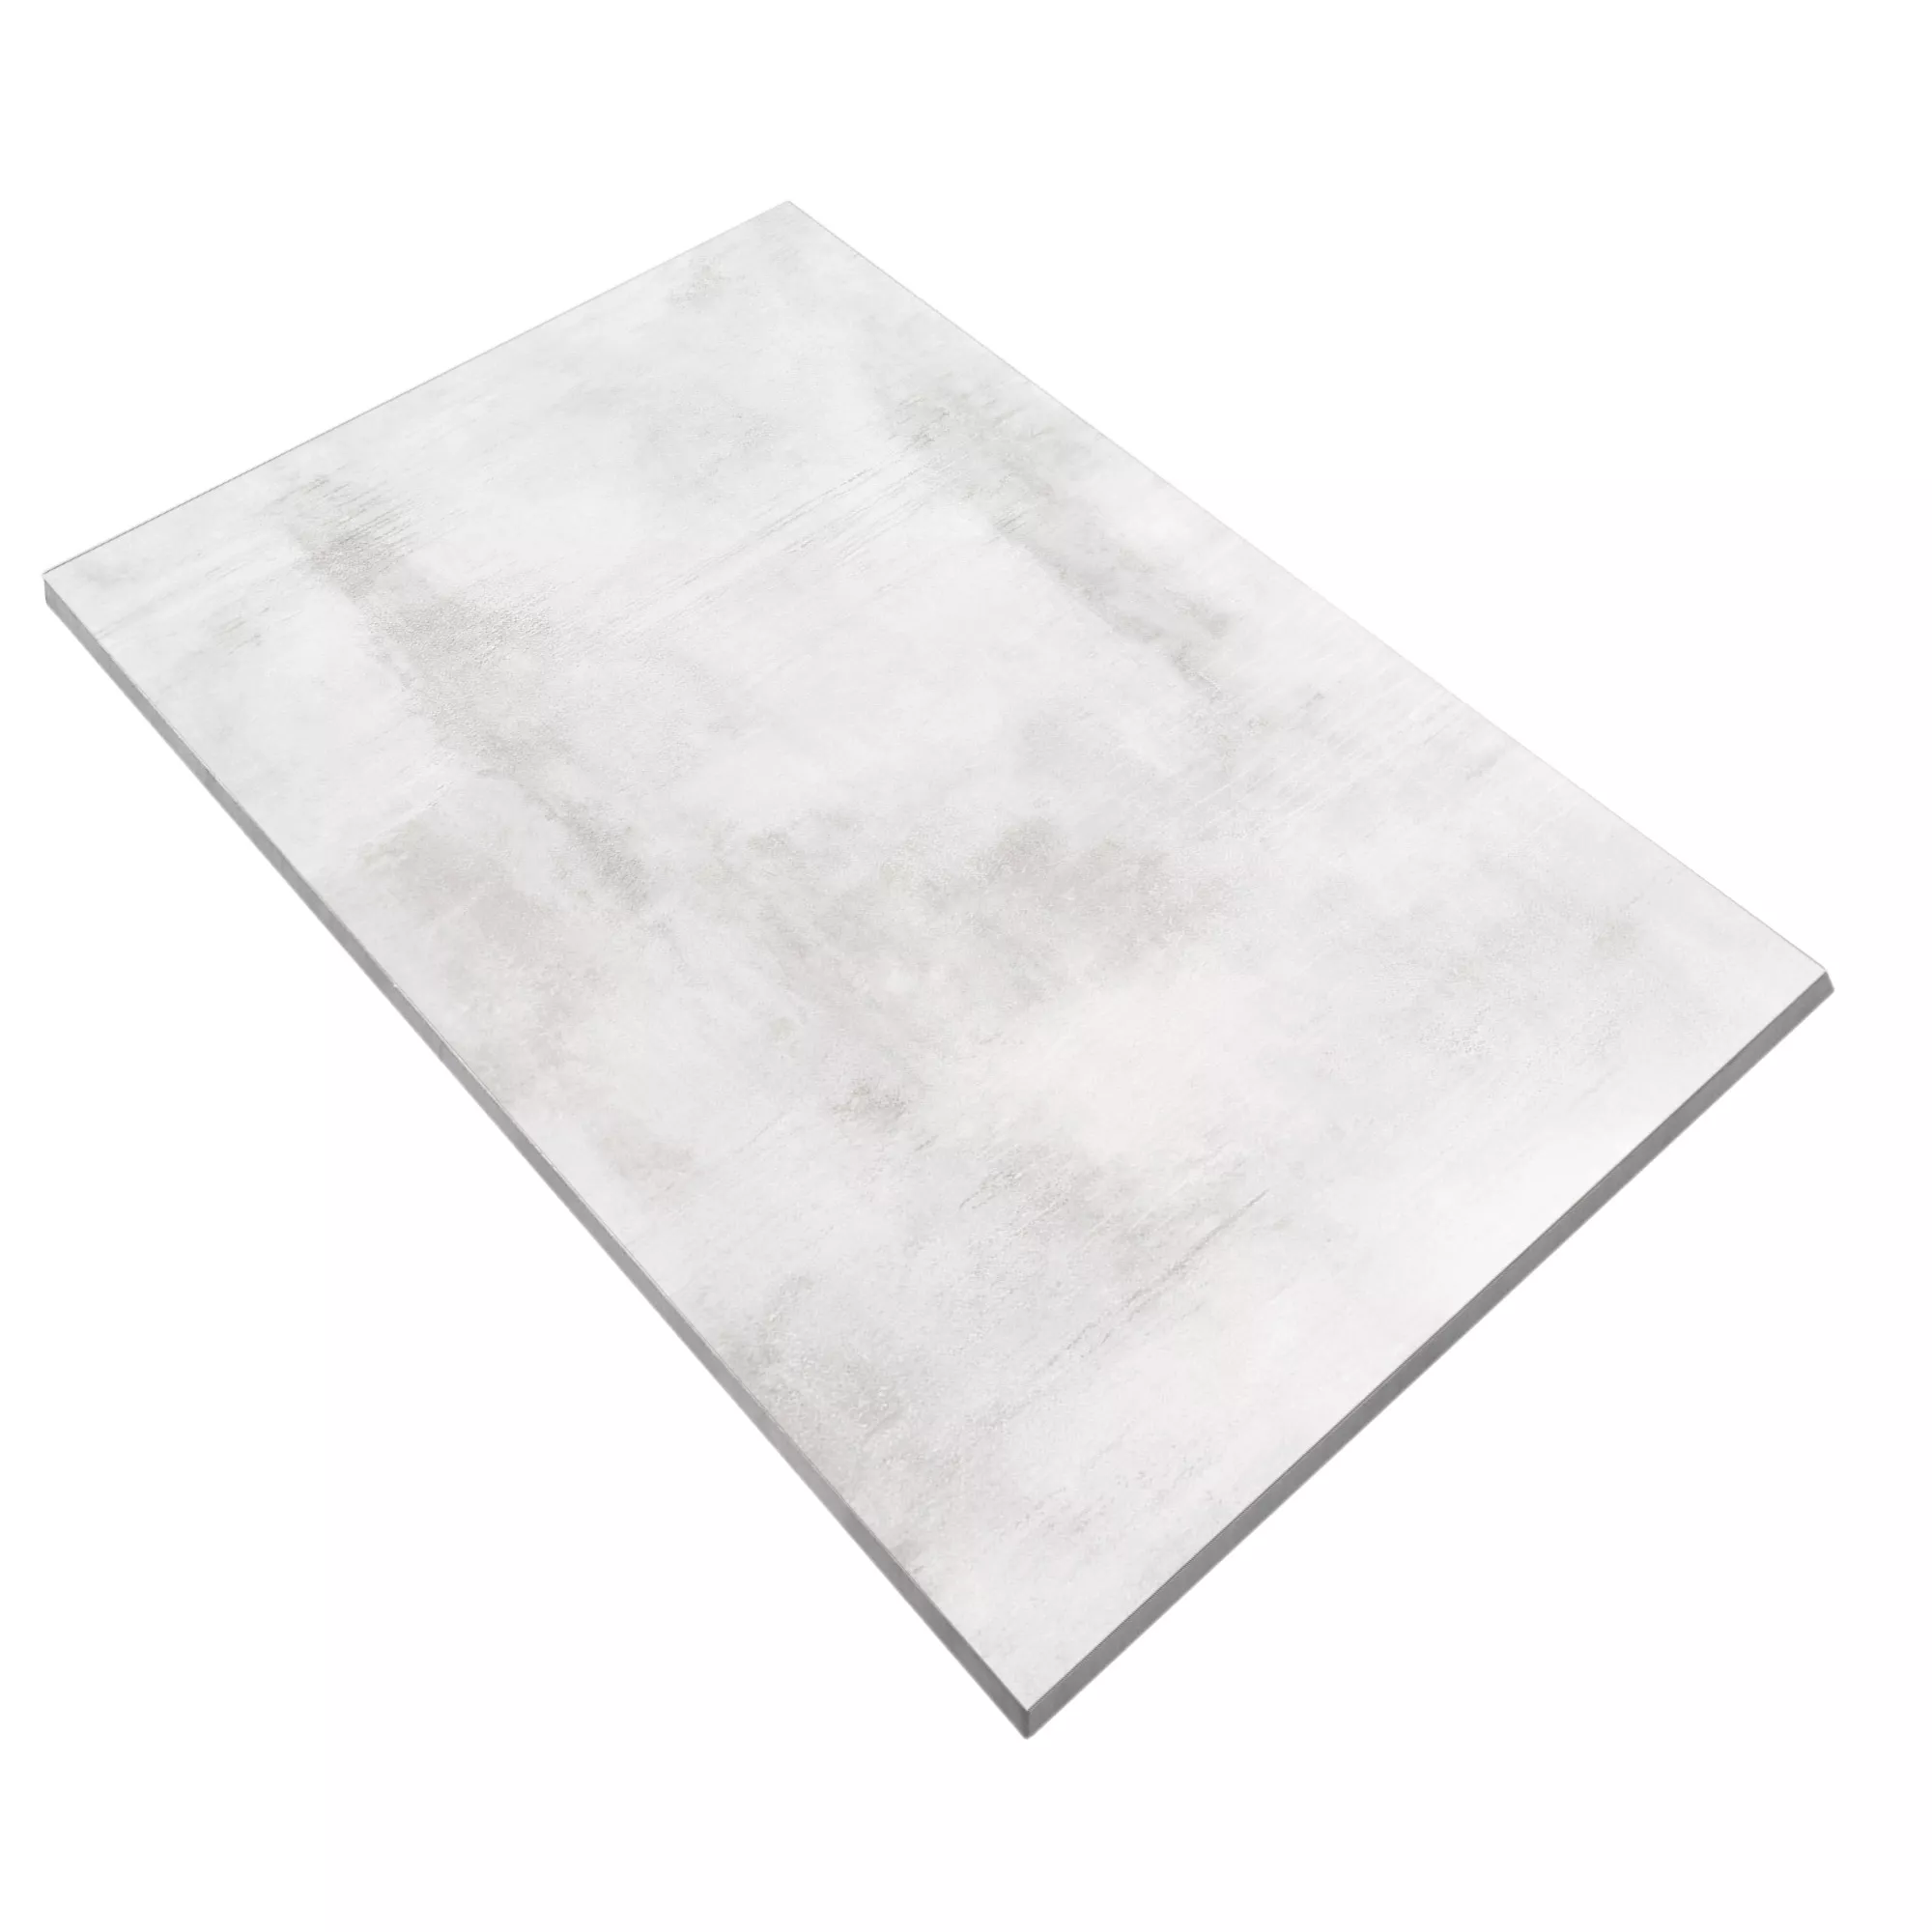 Vzorek Podlahové Dlaždice Tycoon Betonový Vzhled R10 Stříbrná 60x120cm